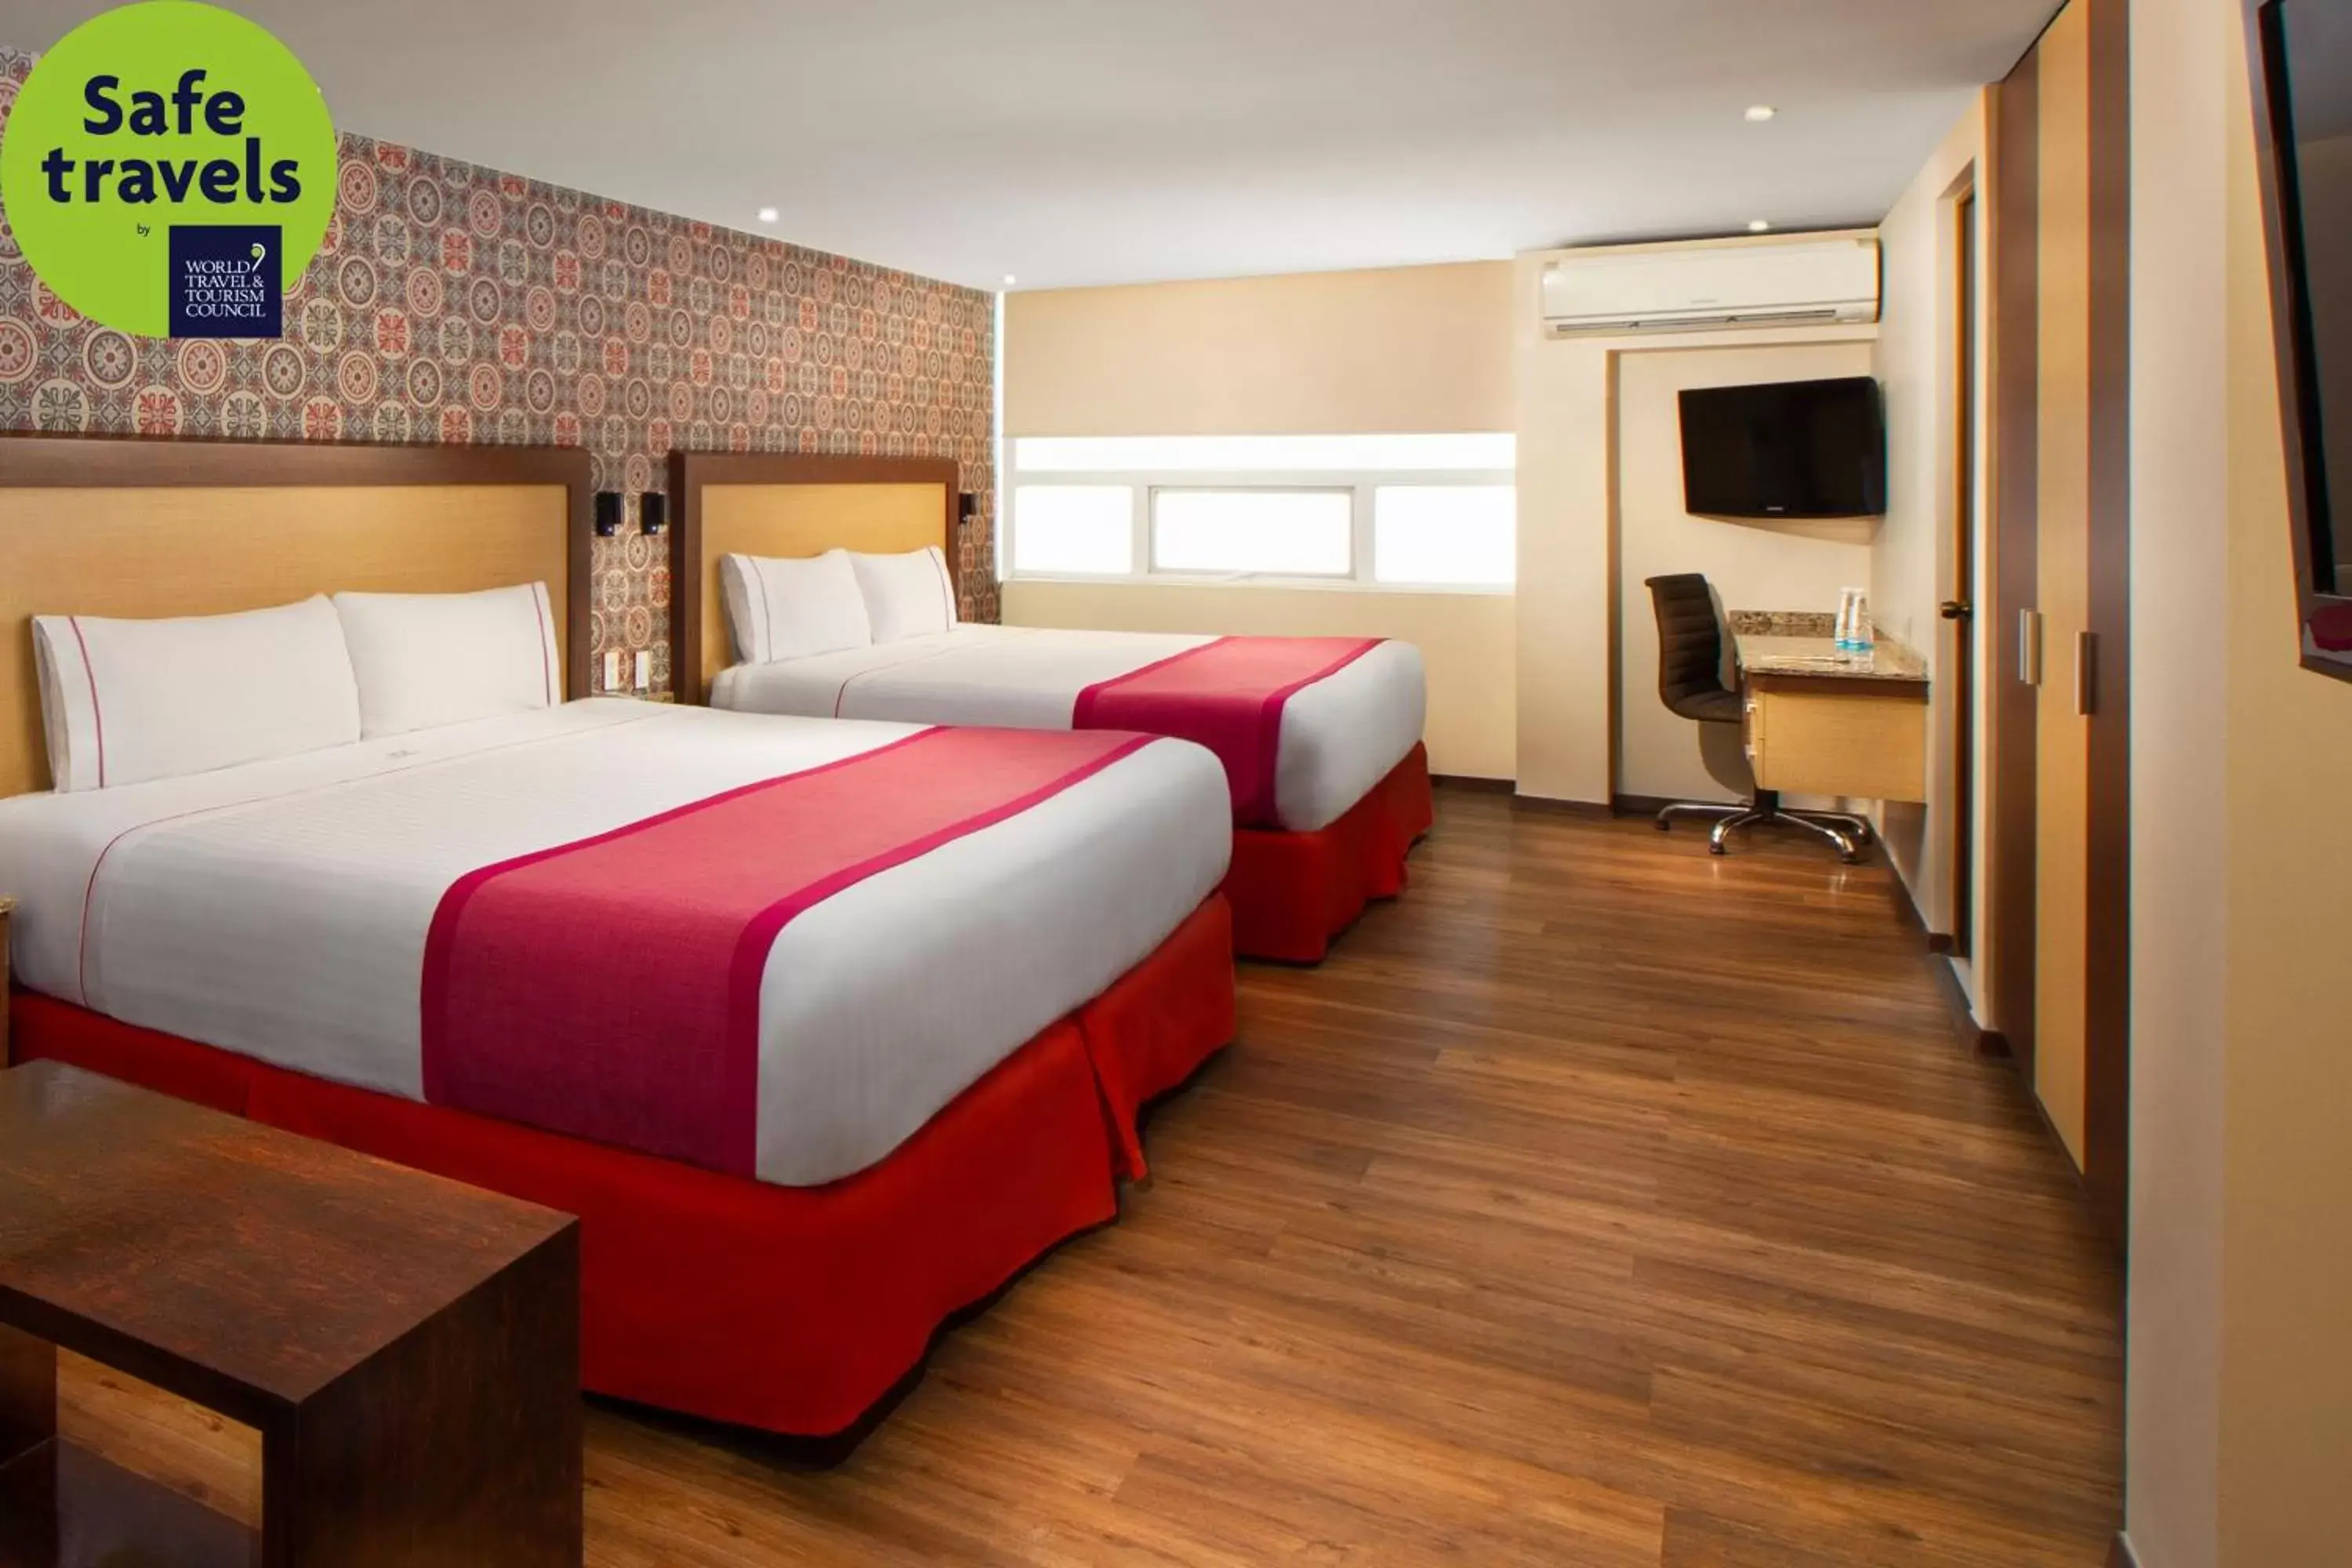 Bed, Room Photo in Hotel MX garibaldi